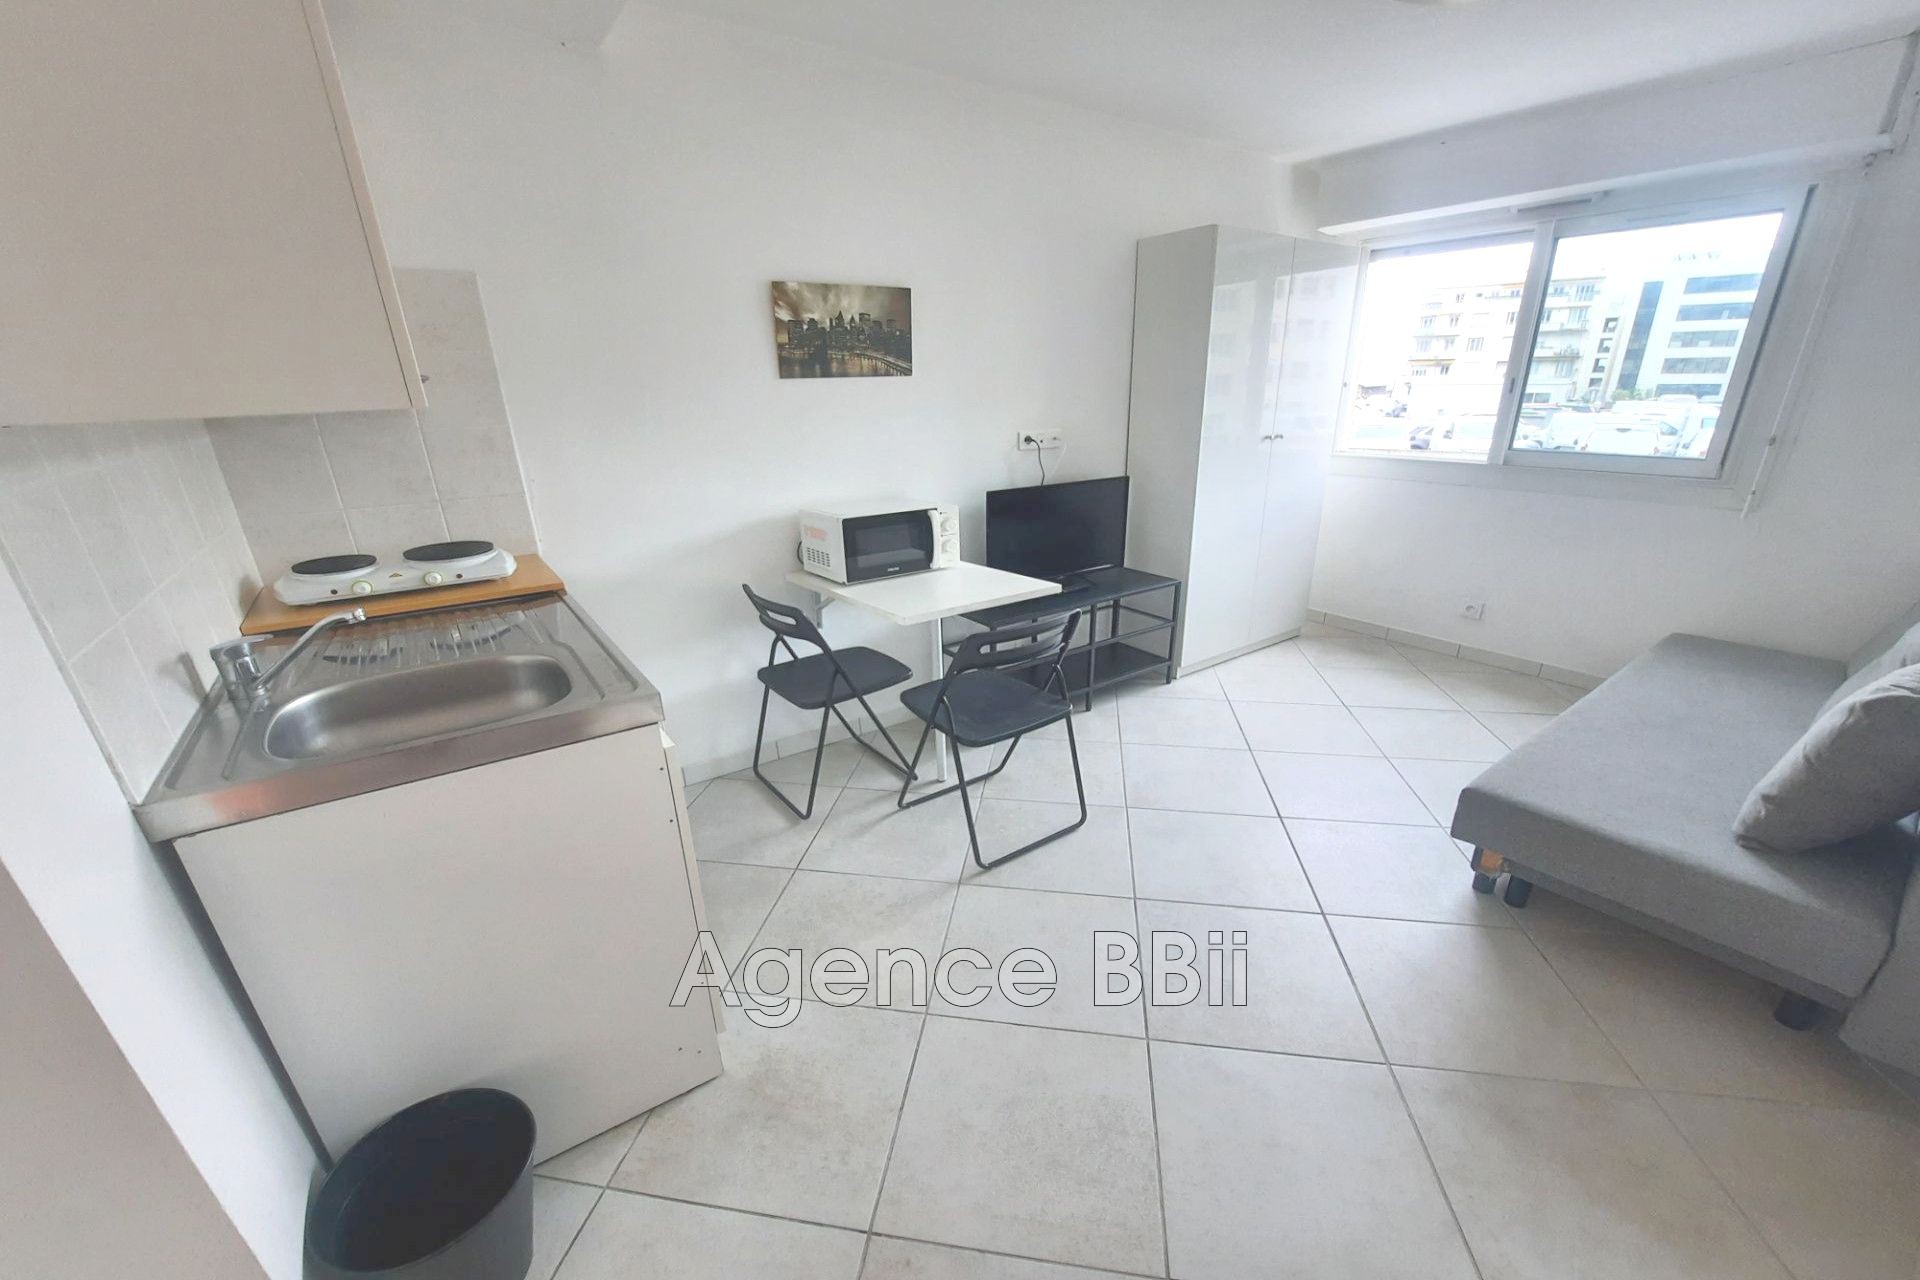 Vente Appartement 15m² 1 Pièce à Nice (06200) - BBII